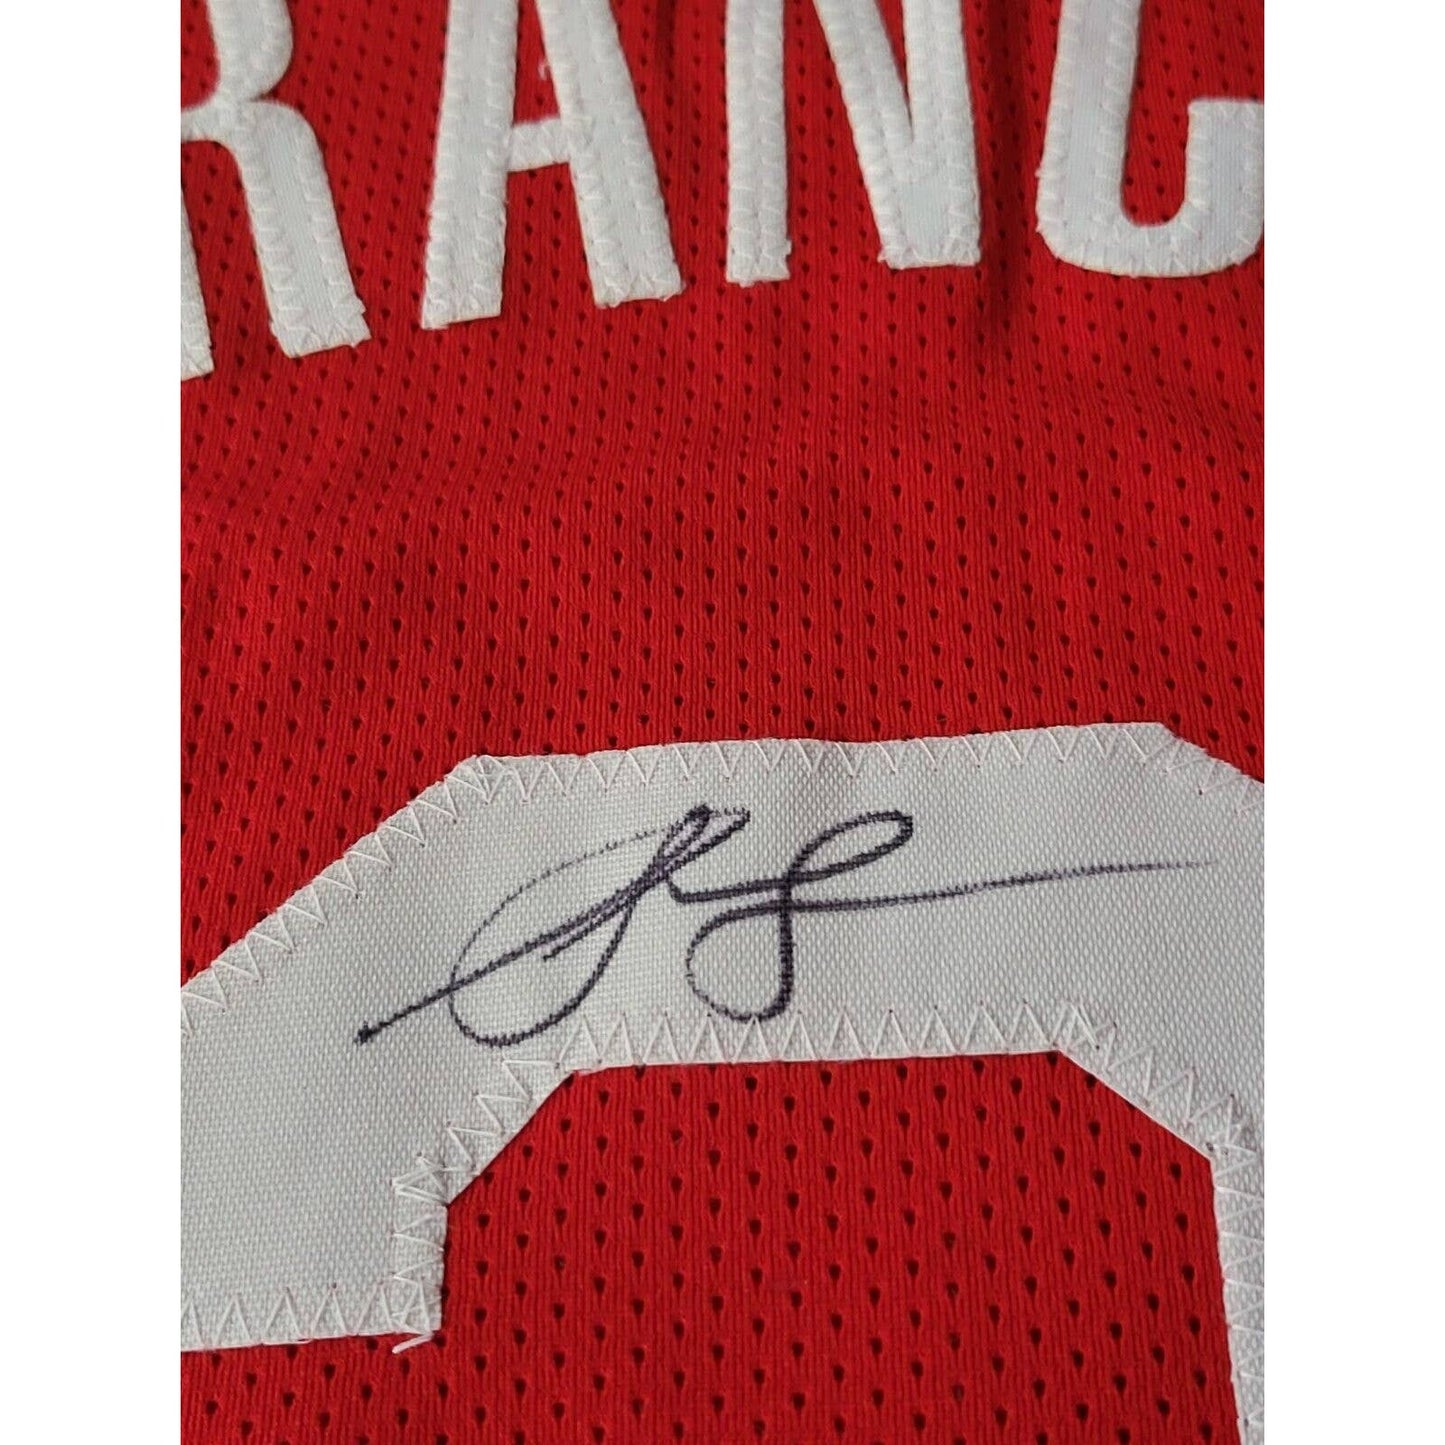 Steve Francis Autographed/Signed Jersey Beckett COA Houston Rockets - TreasuresEvolved